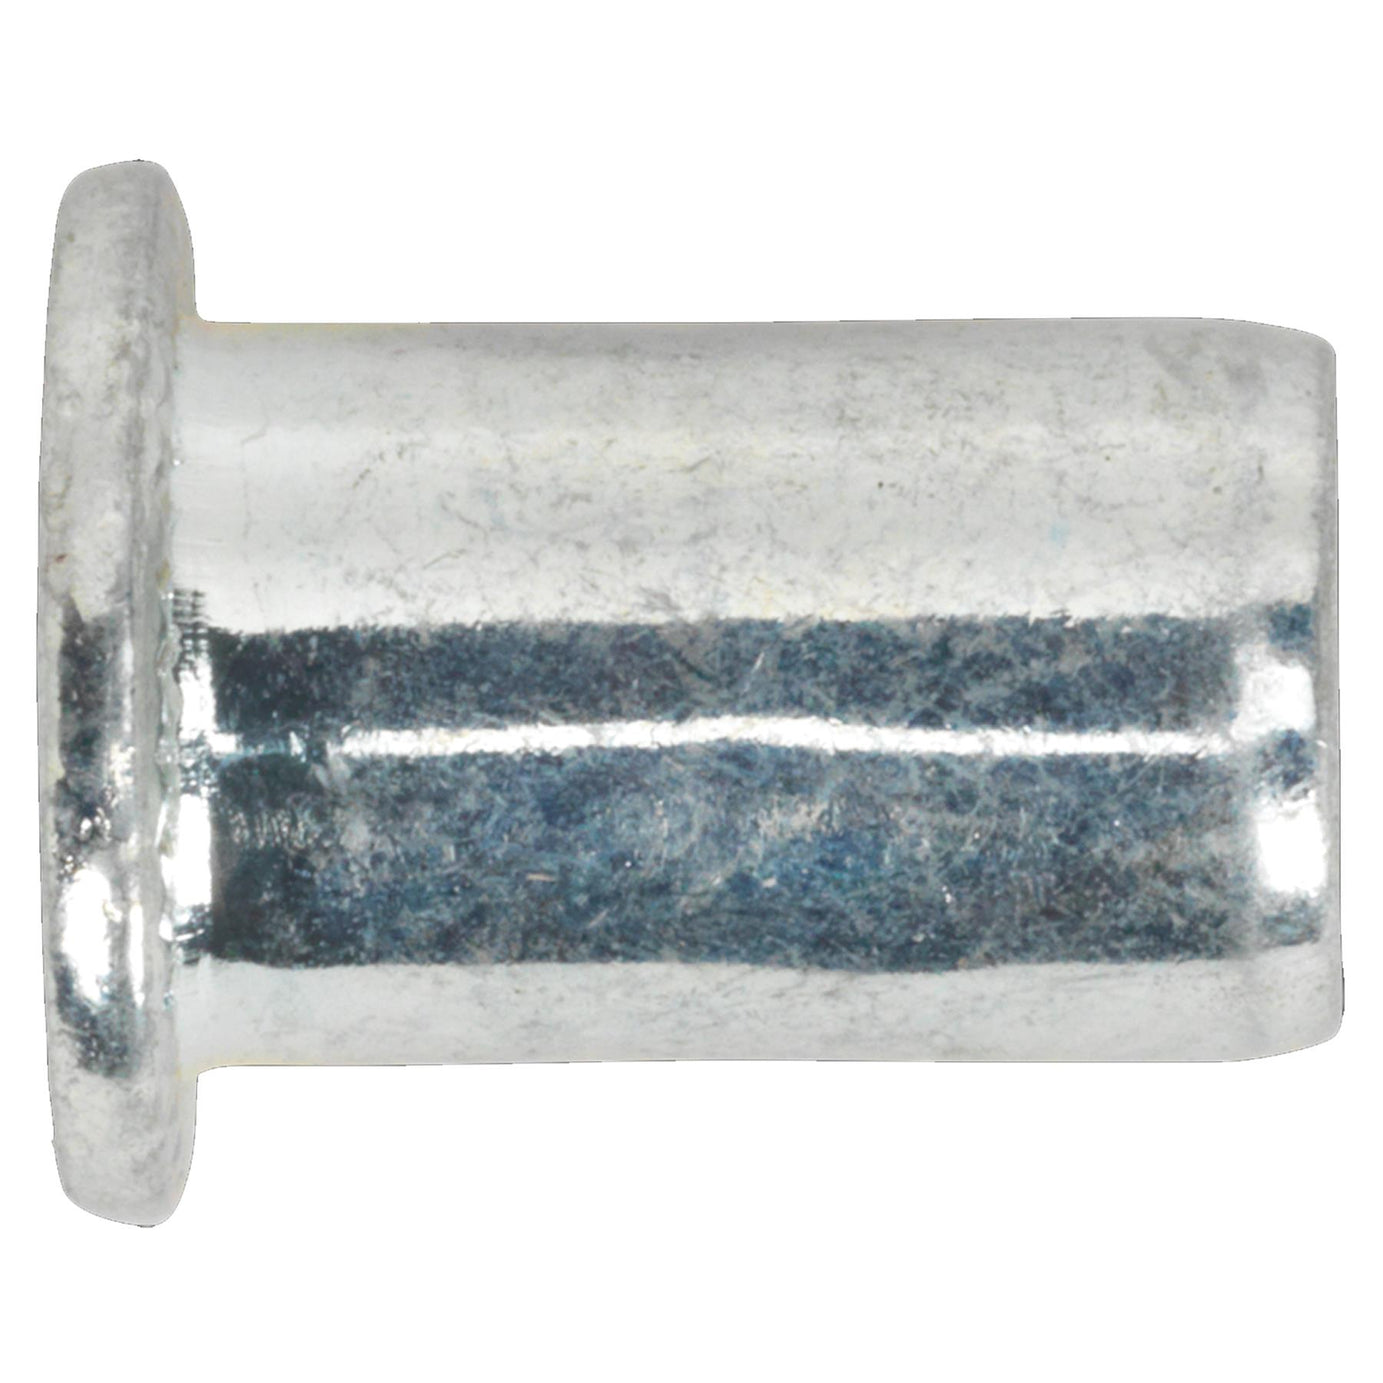 Sealey Threaded Insert (Rivet Nut) M10 Regular Pack of 50